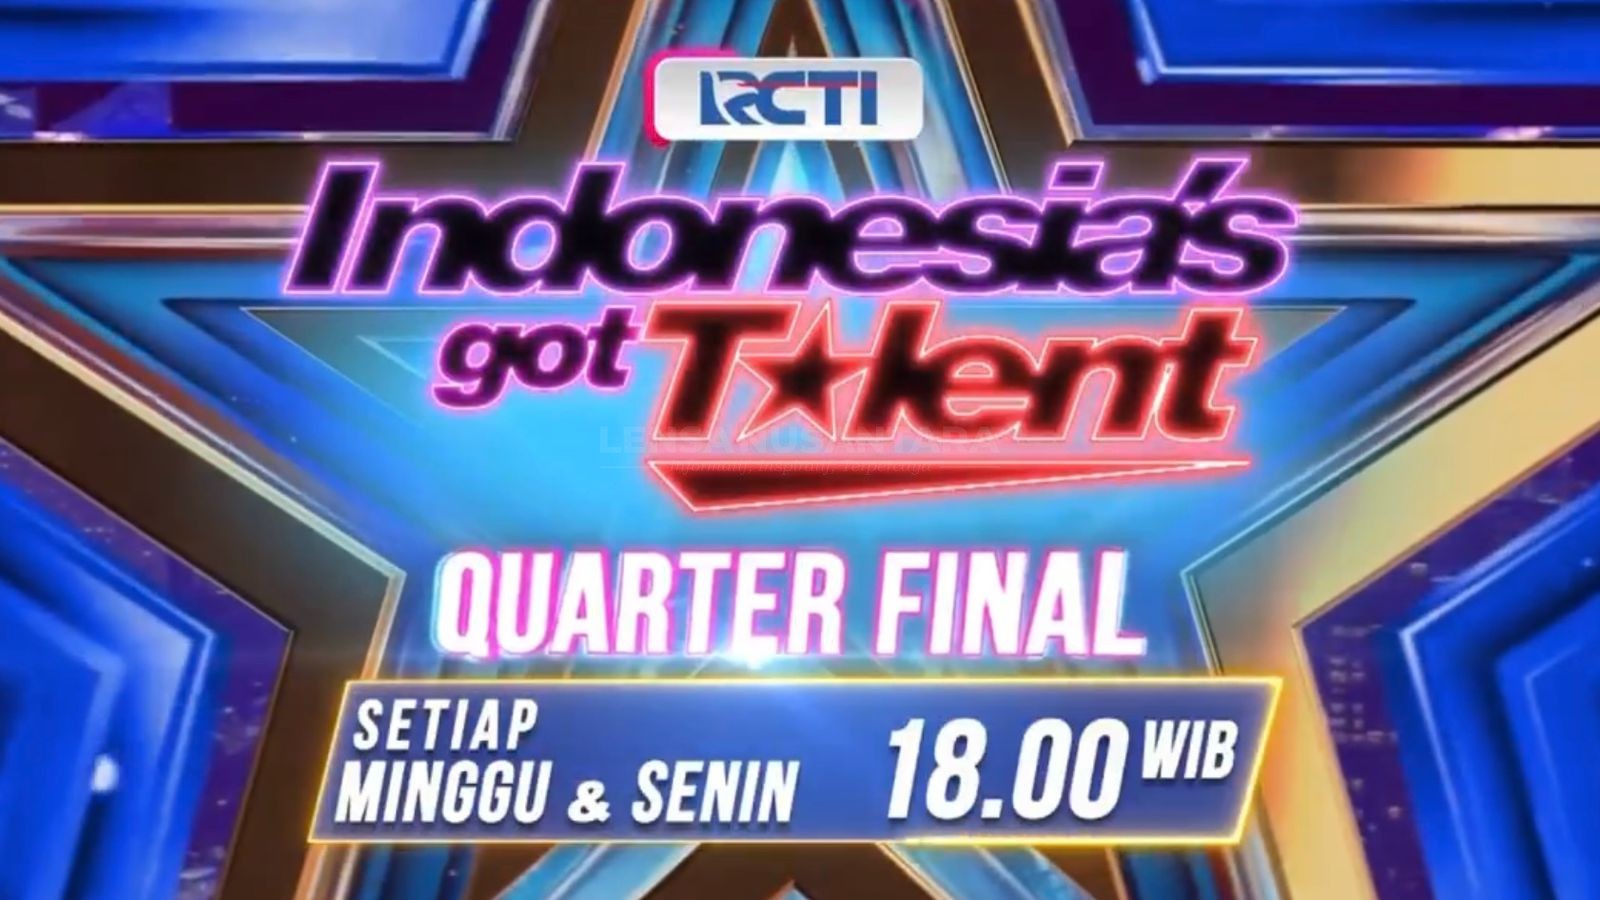 Indonesia's Got Talent